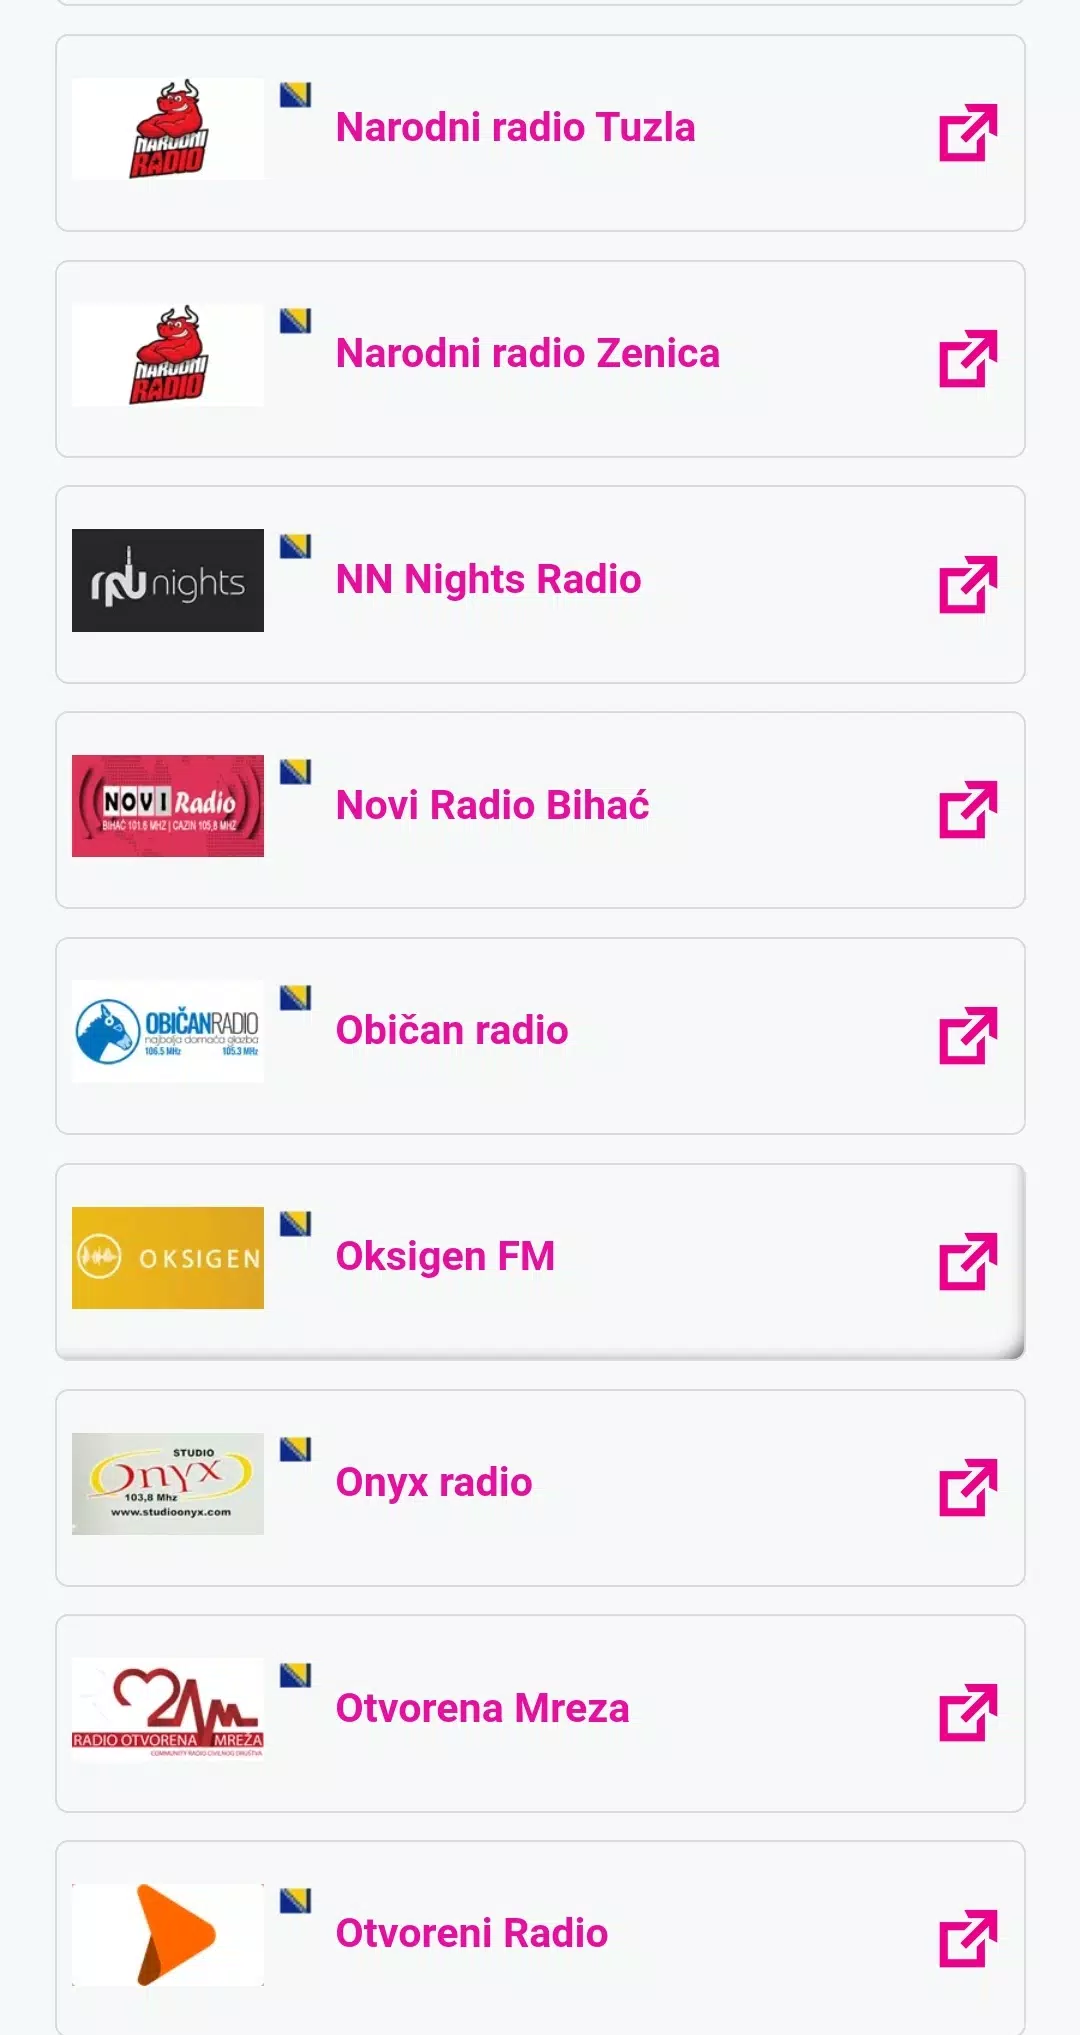 RADIOSTANICA.BA - Radio stanic APK for Android Download